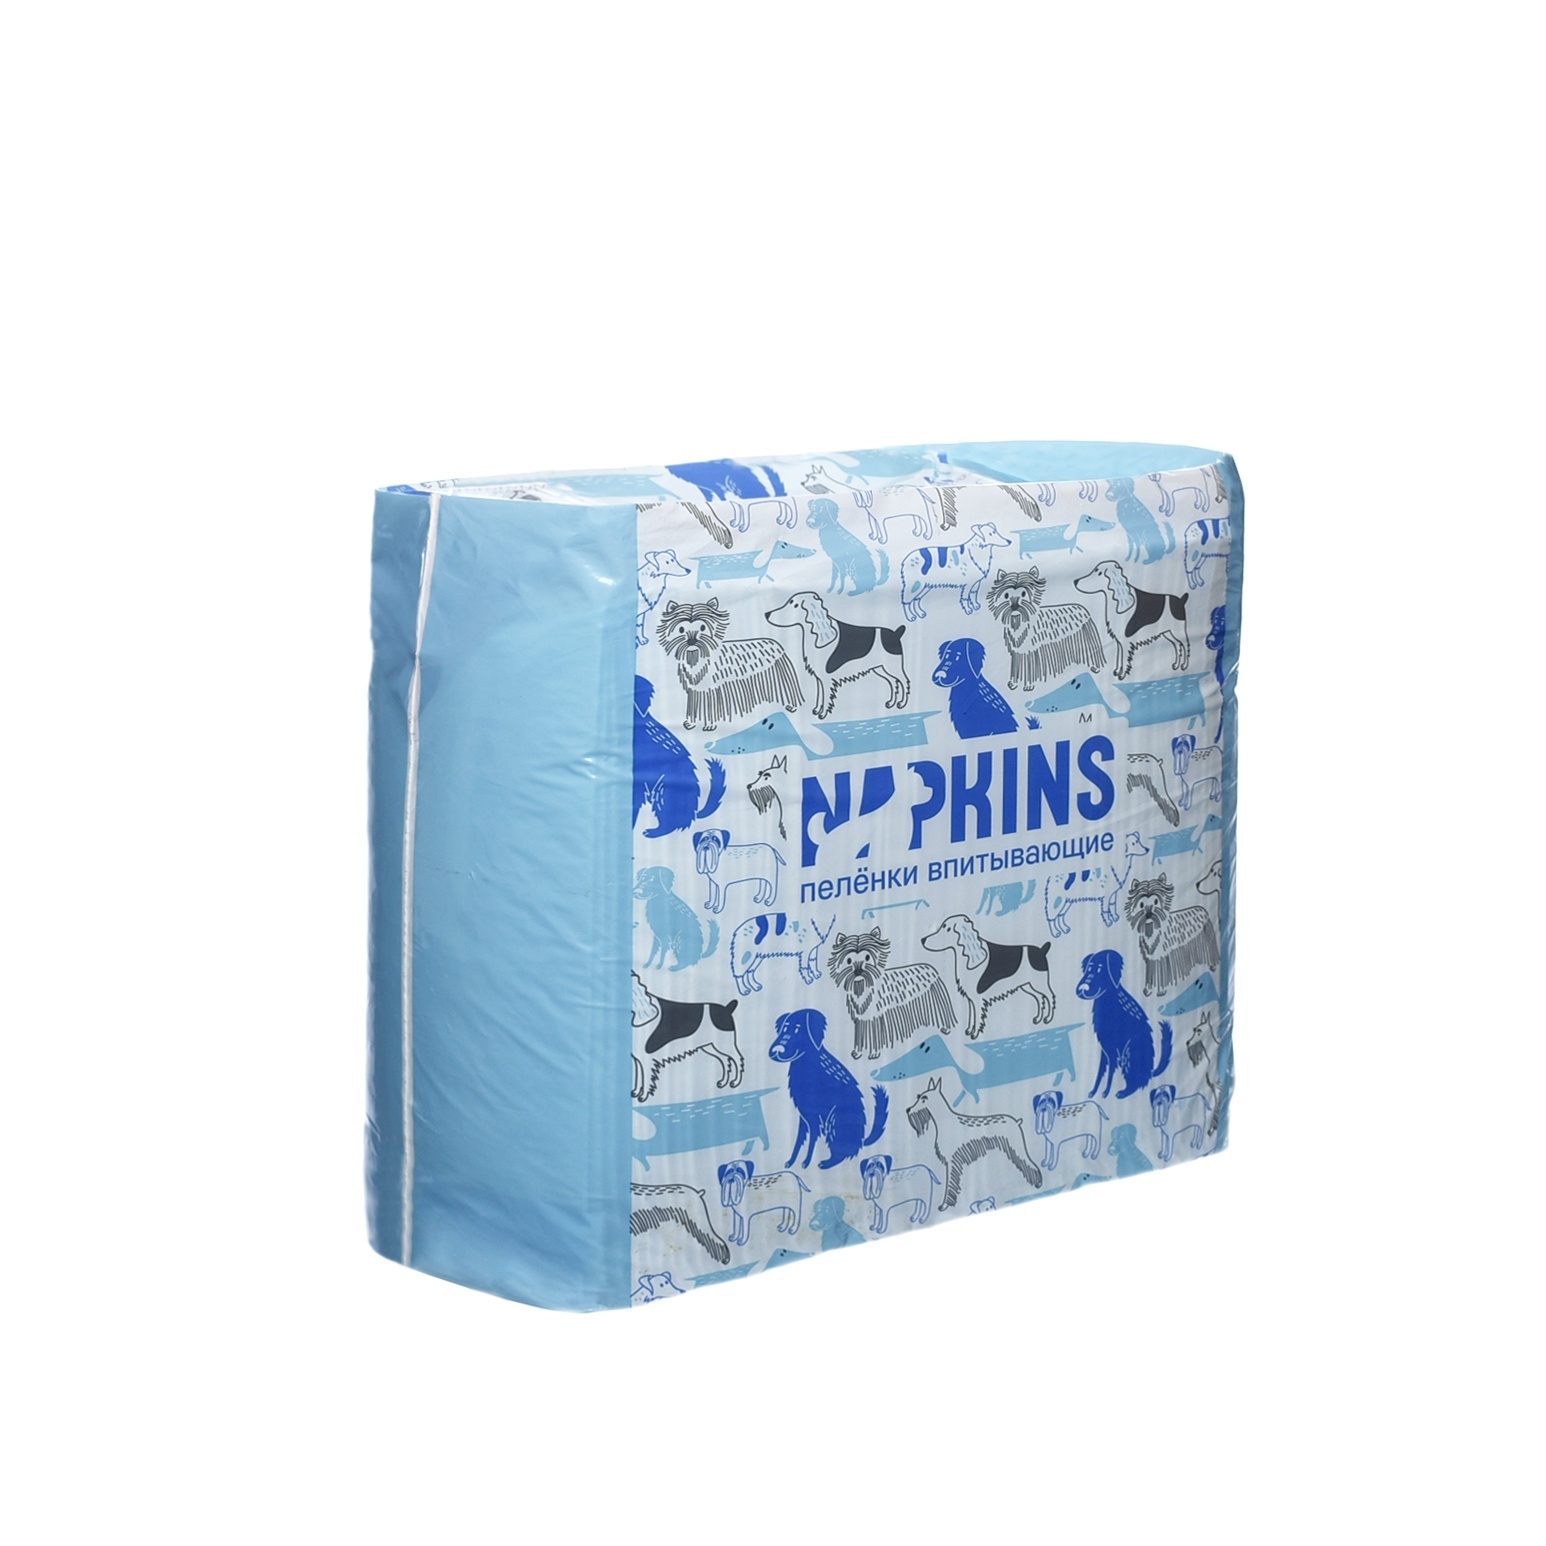 NAPKINS NAPKINS гелевые пелёнки для собак 60х40 (300 г) napkins napkins гелевые пелёнки для собак 60х90 30 шт